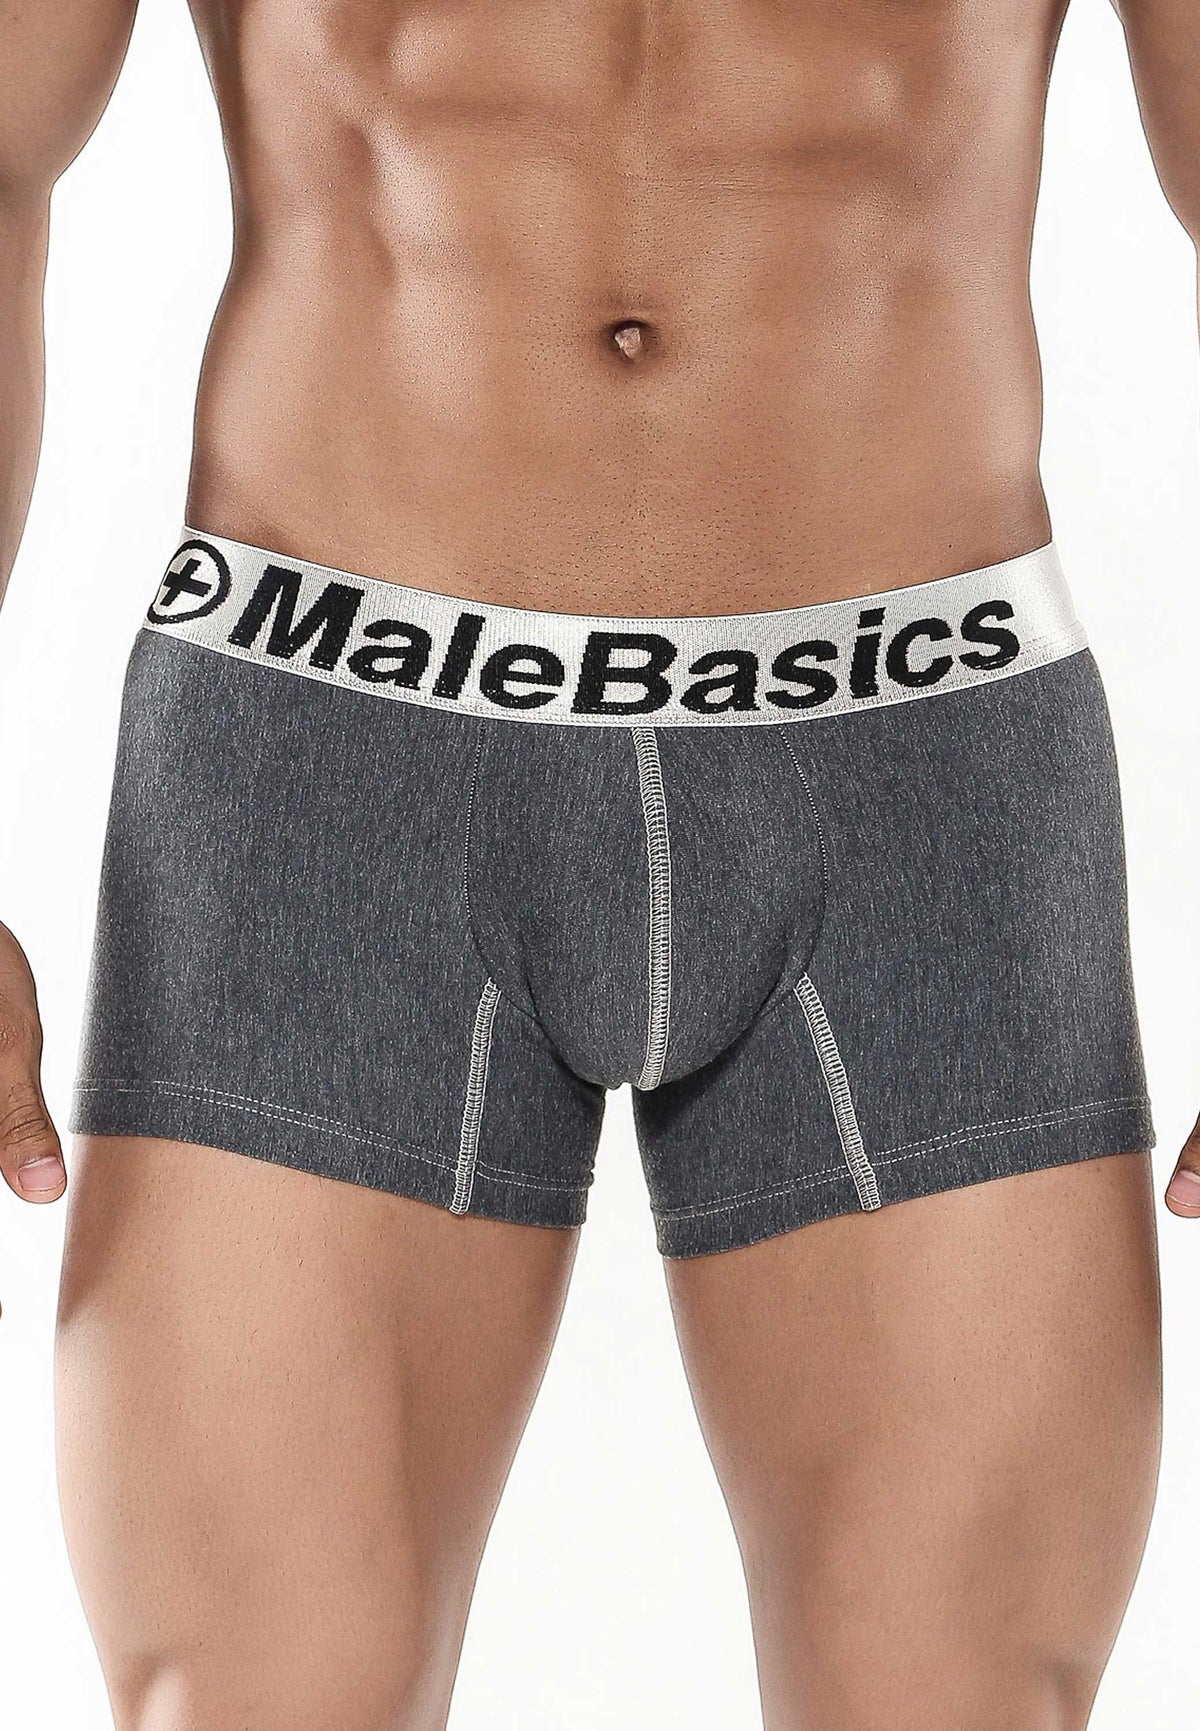 Male Basics Asphalt Trunk